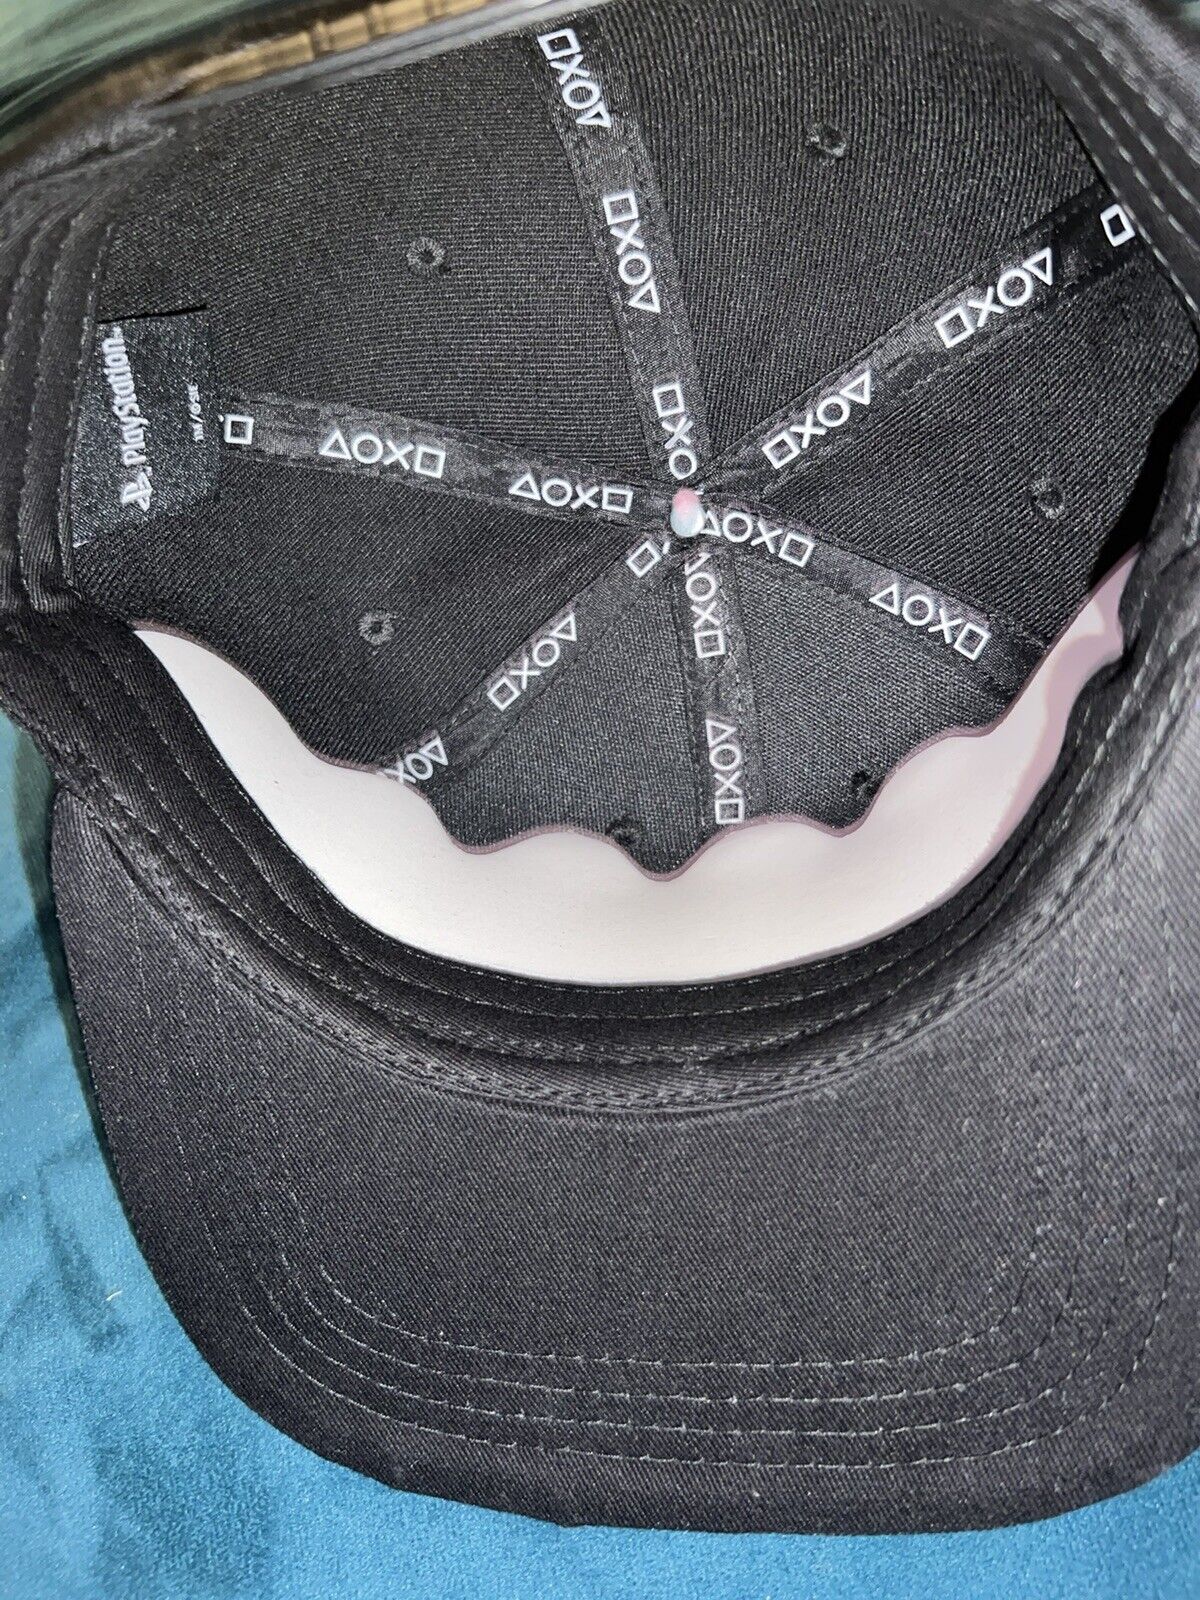 Playstation PS5 Logo Cap Black SnapBack Hat